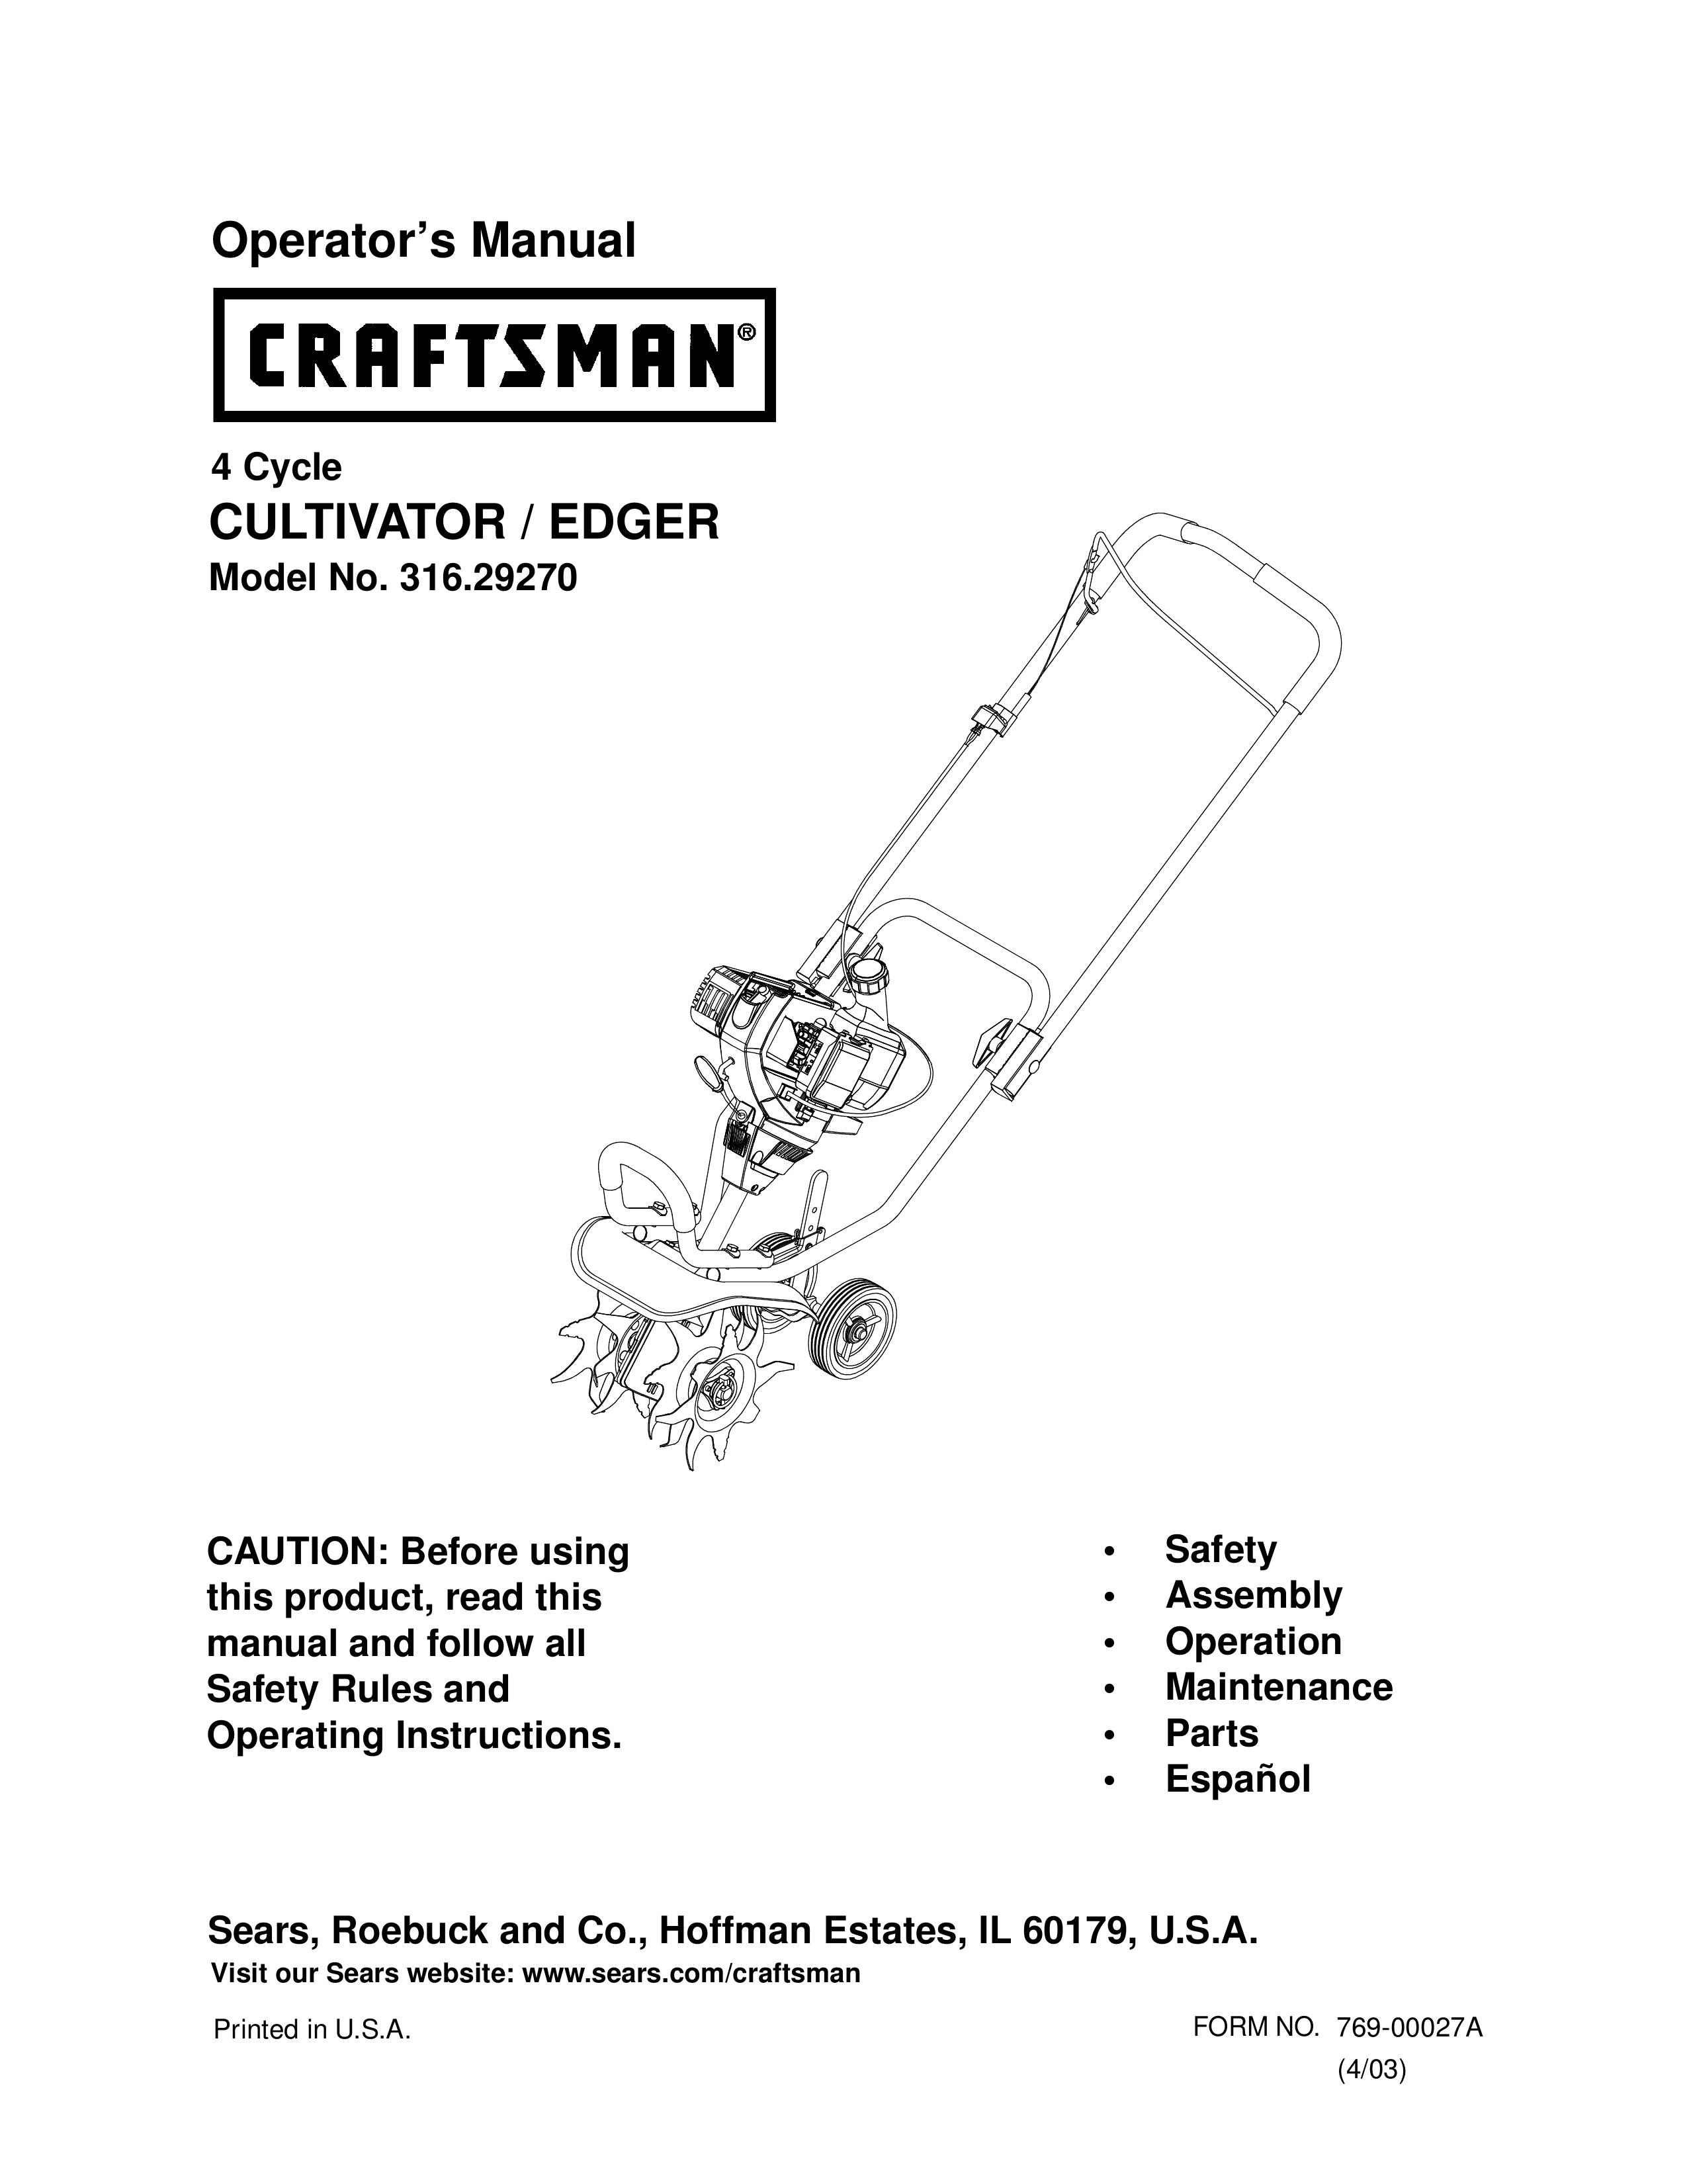 Craftsman 316.2927 Cultivator User Manual